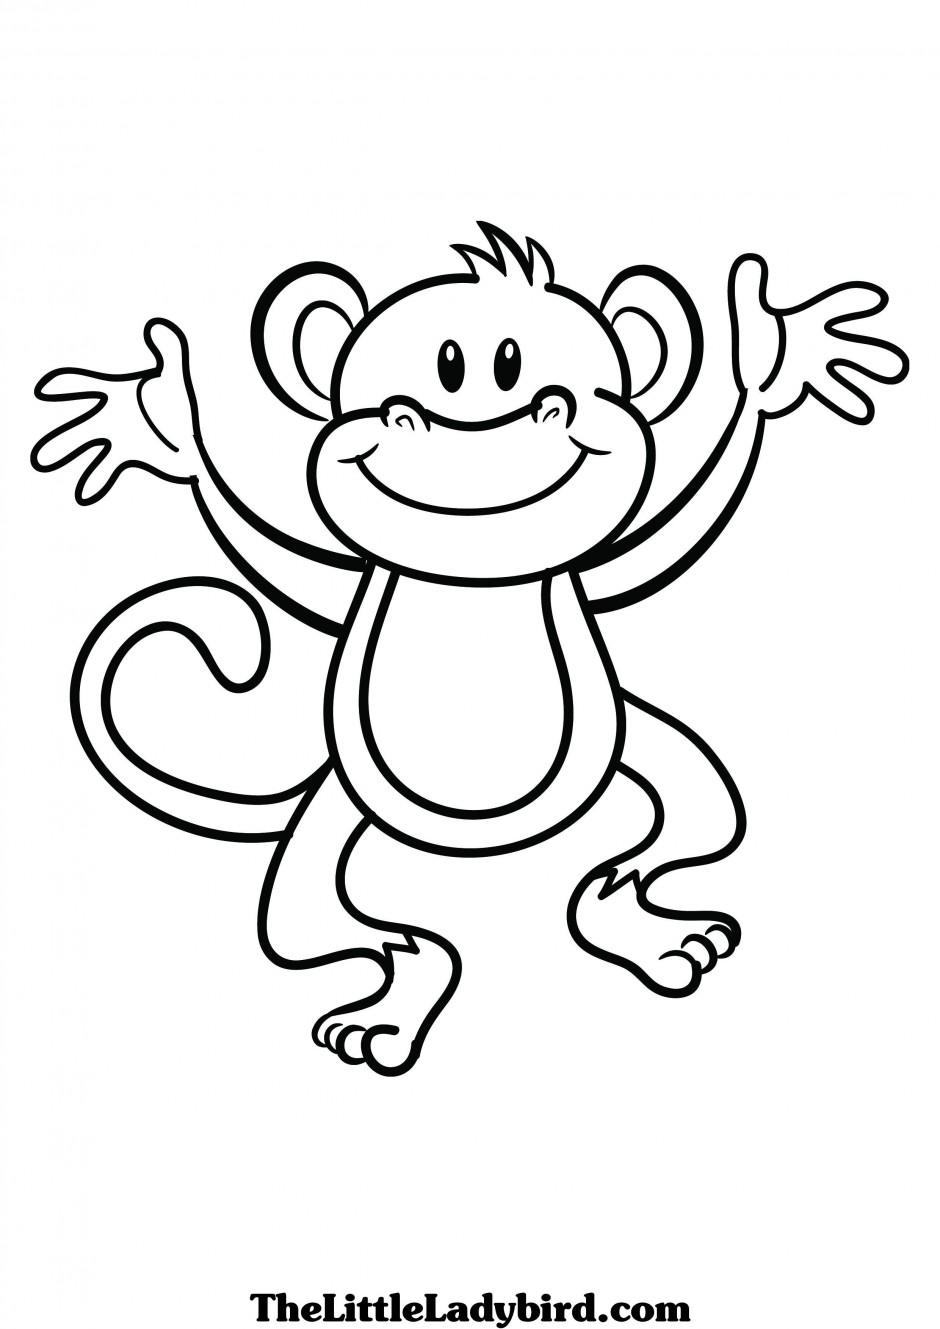 Monkey clip art free. Ape clipart black and white